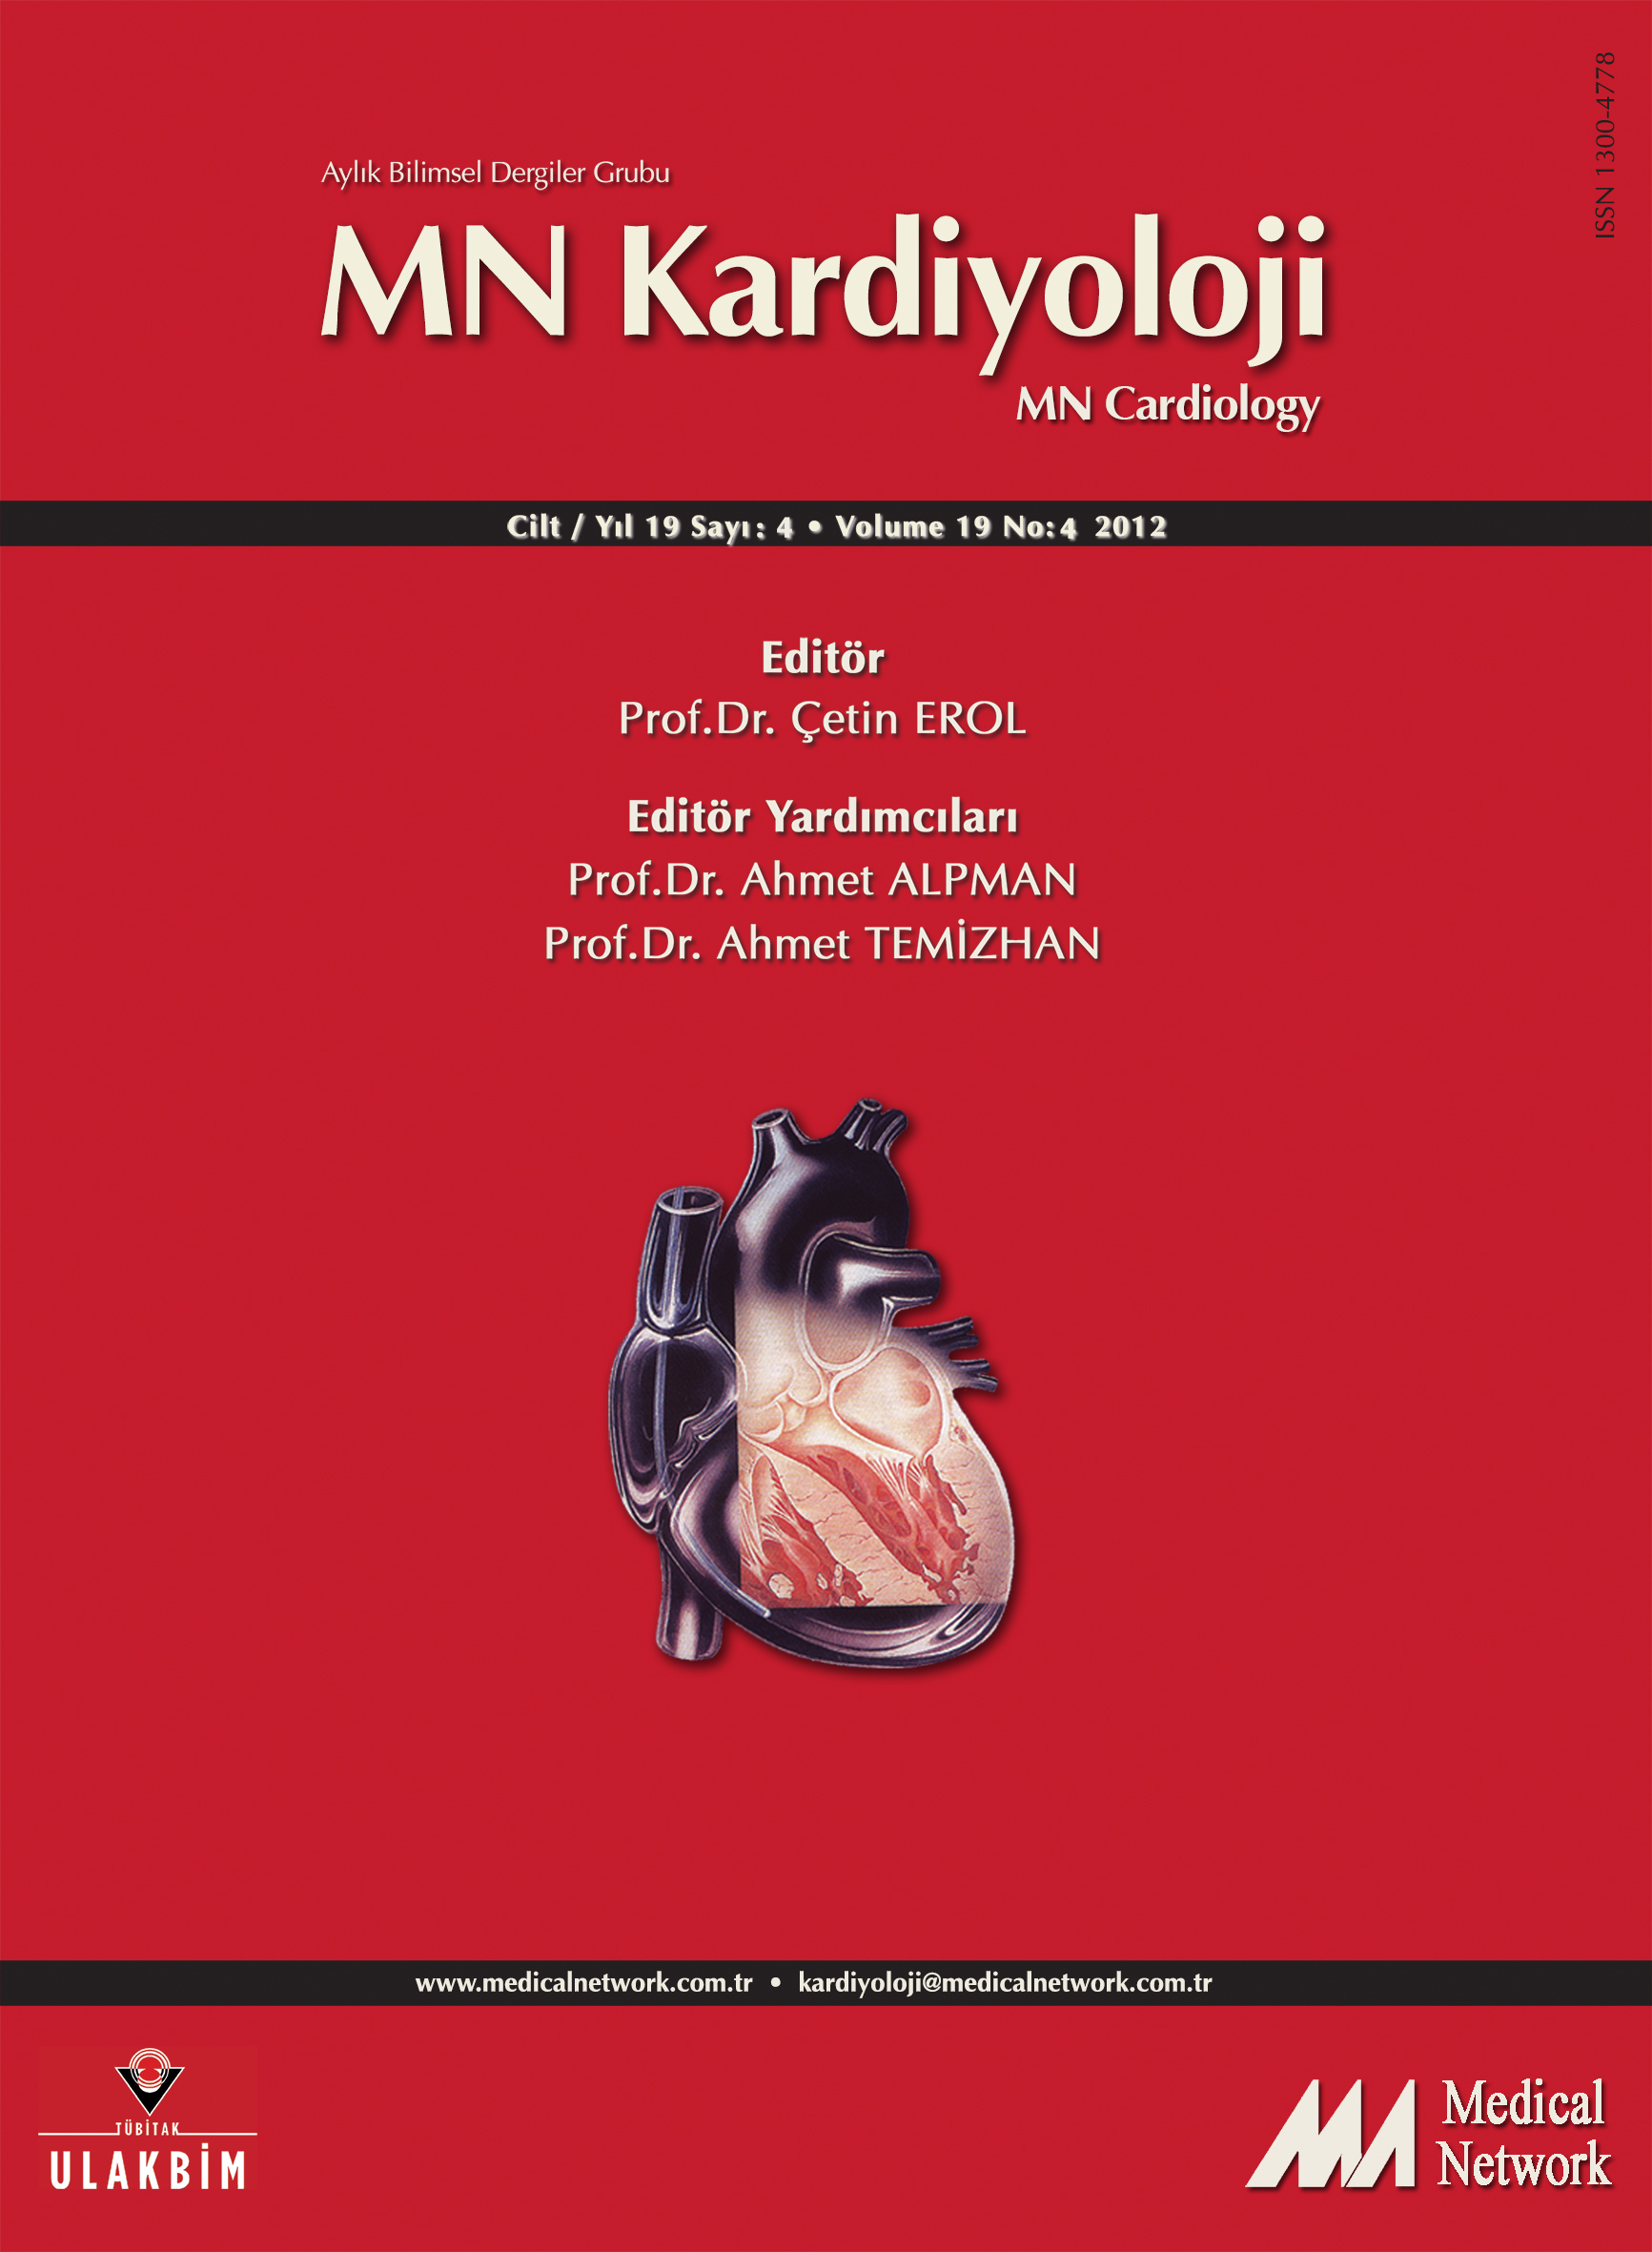 <p>MN Kardiyoloji Cilt: 19 Say: 4 2012 (MN Cardiology Volume: 19 No: 4 2012)</p>